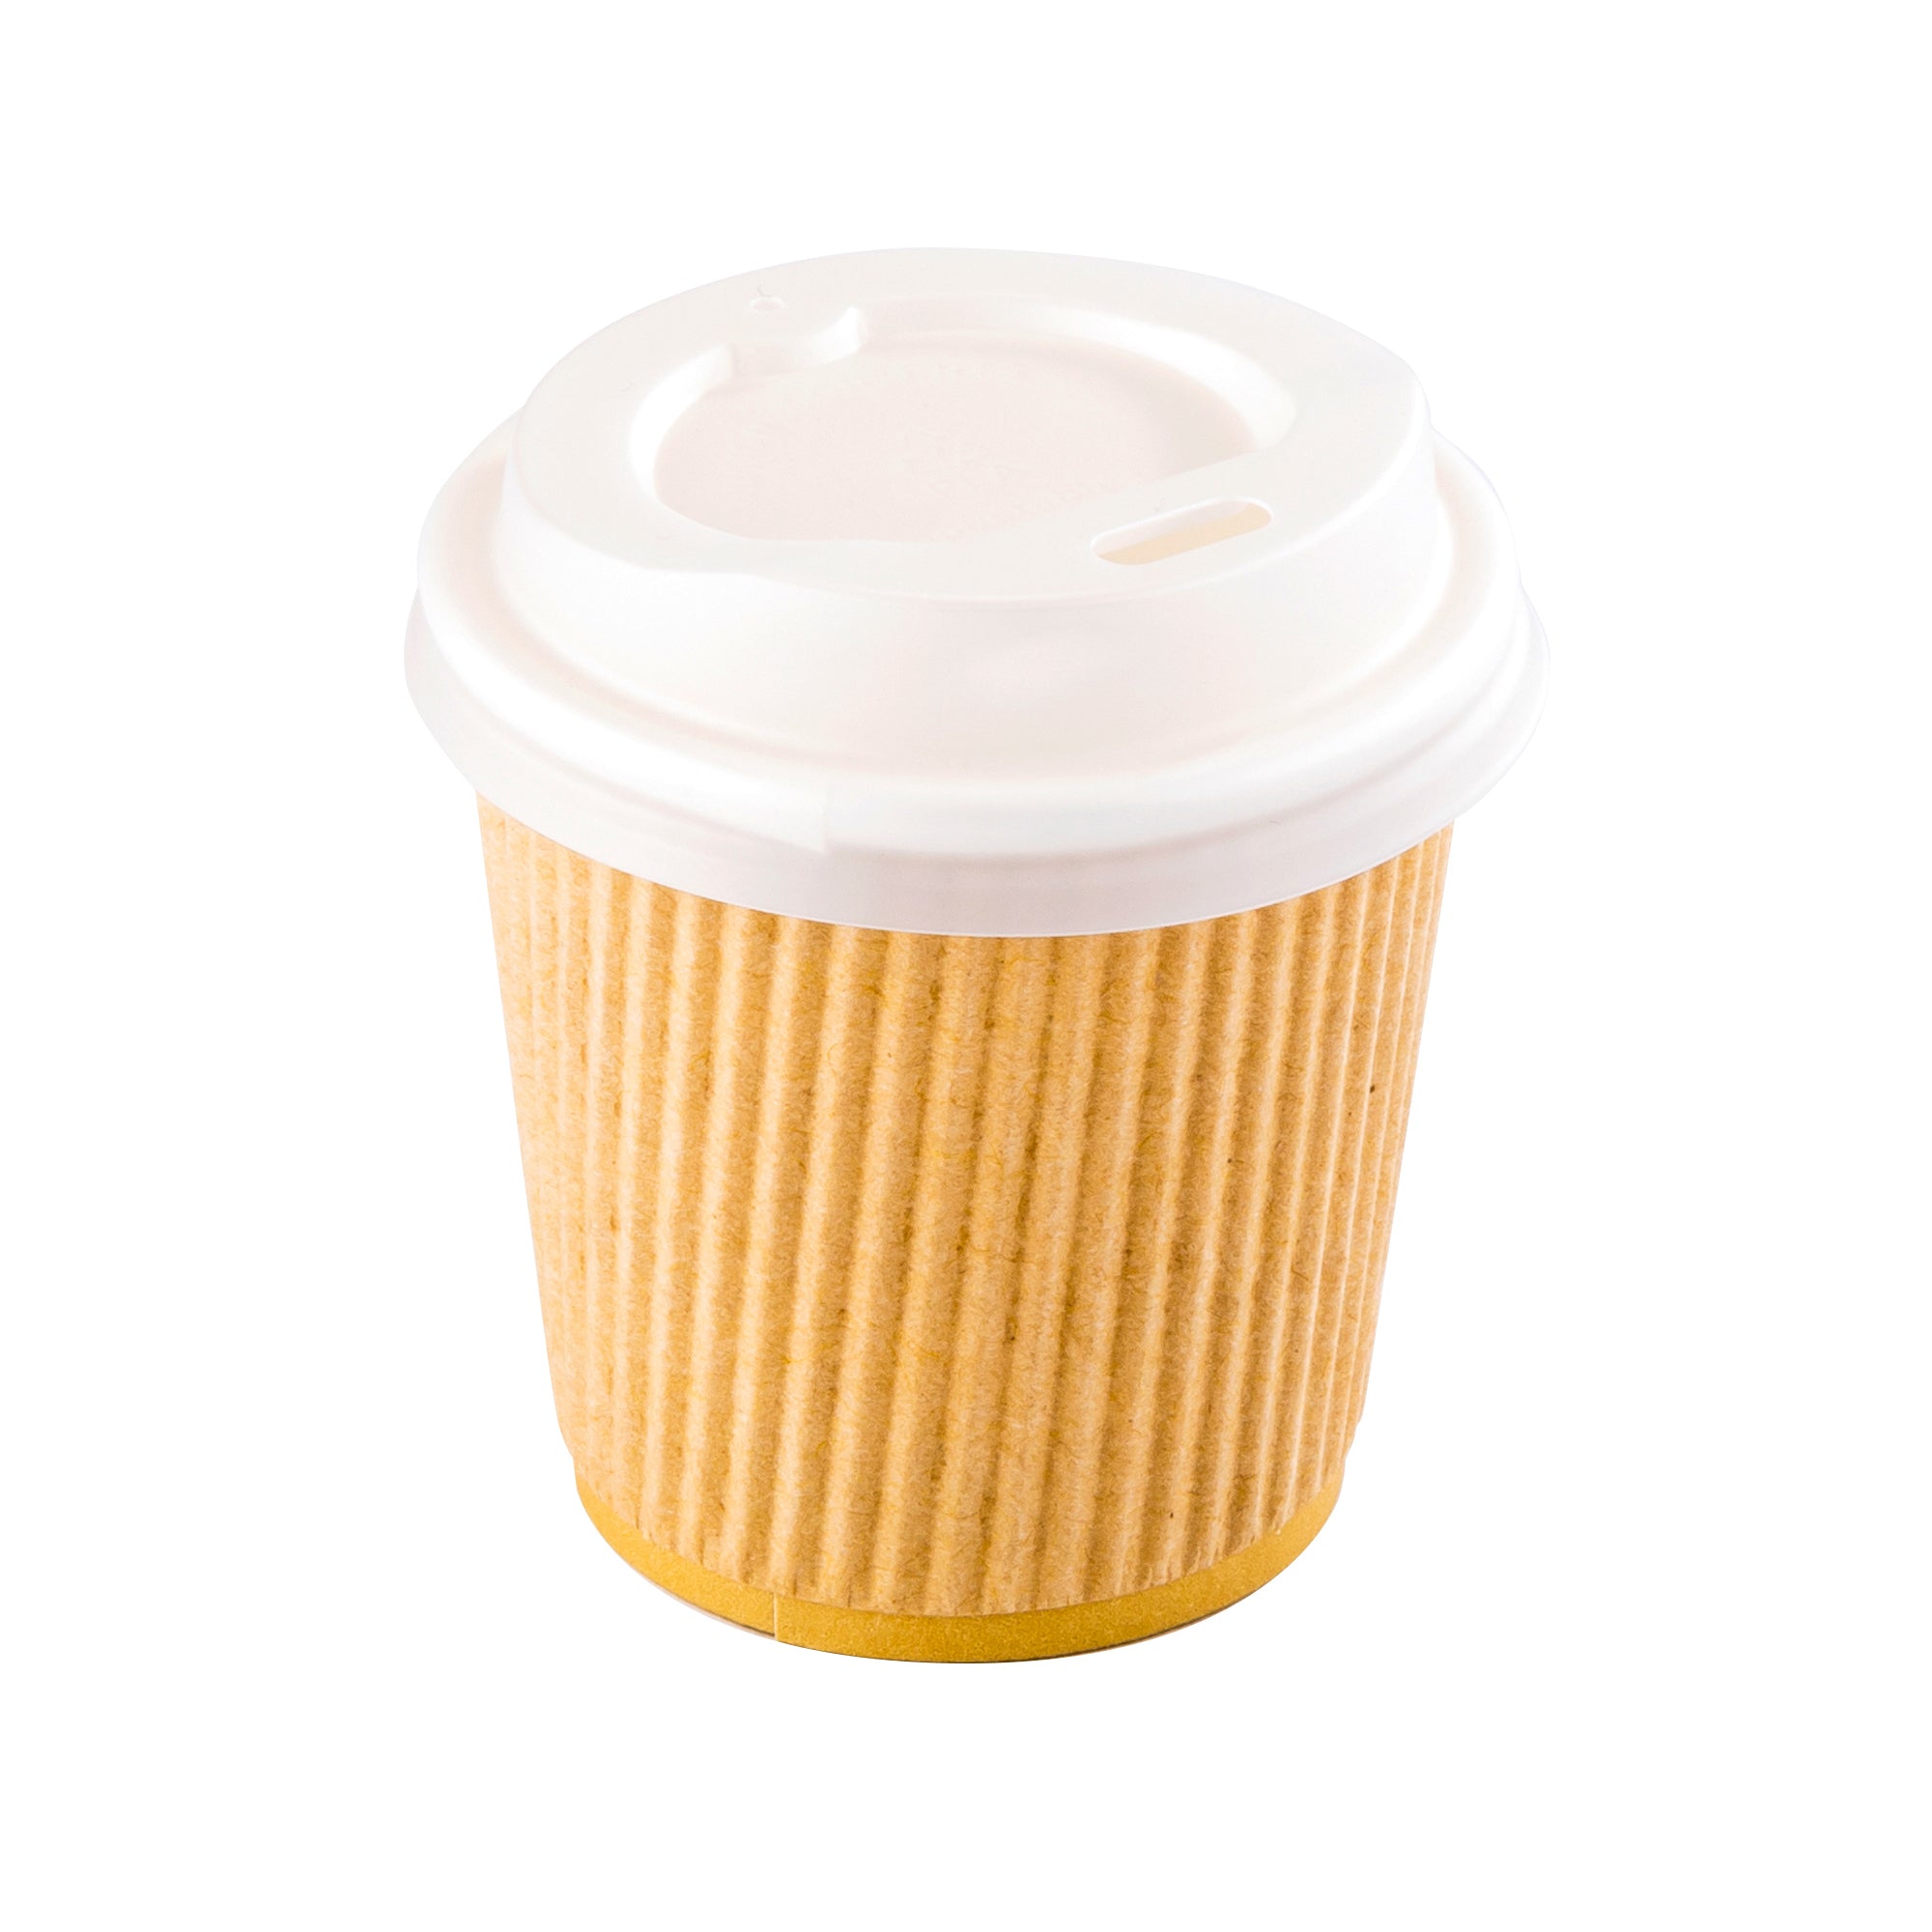 PLA Compostable Plastic Coffee Cup Lids - White - Fits 4 oz ...